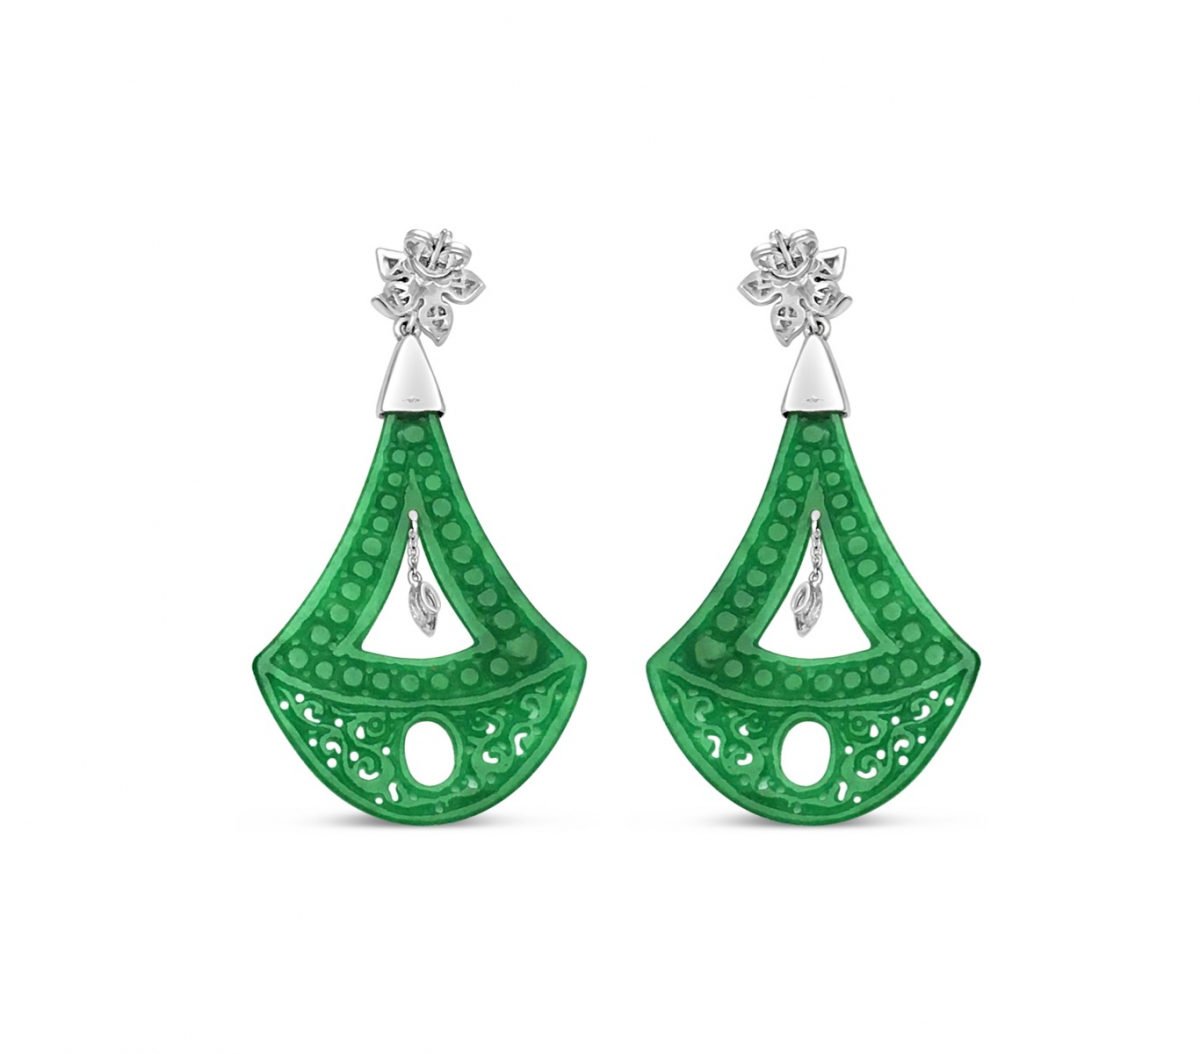 Jades and Diamonds Earrings